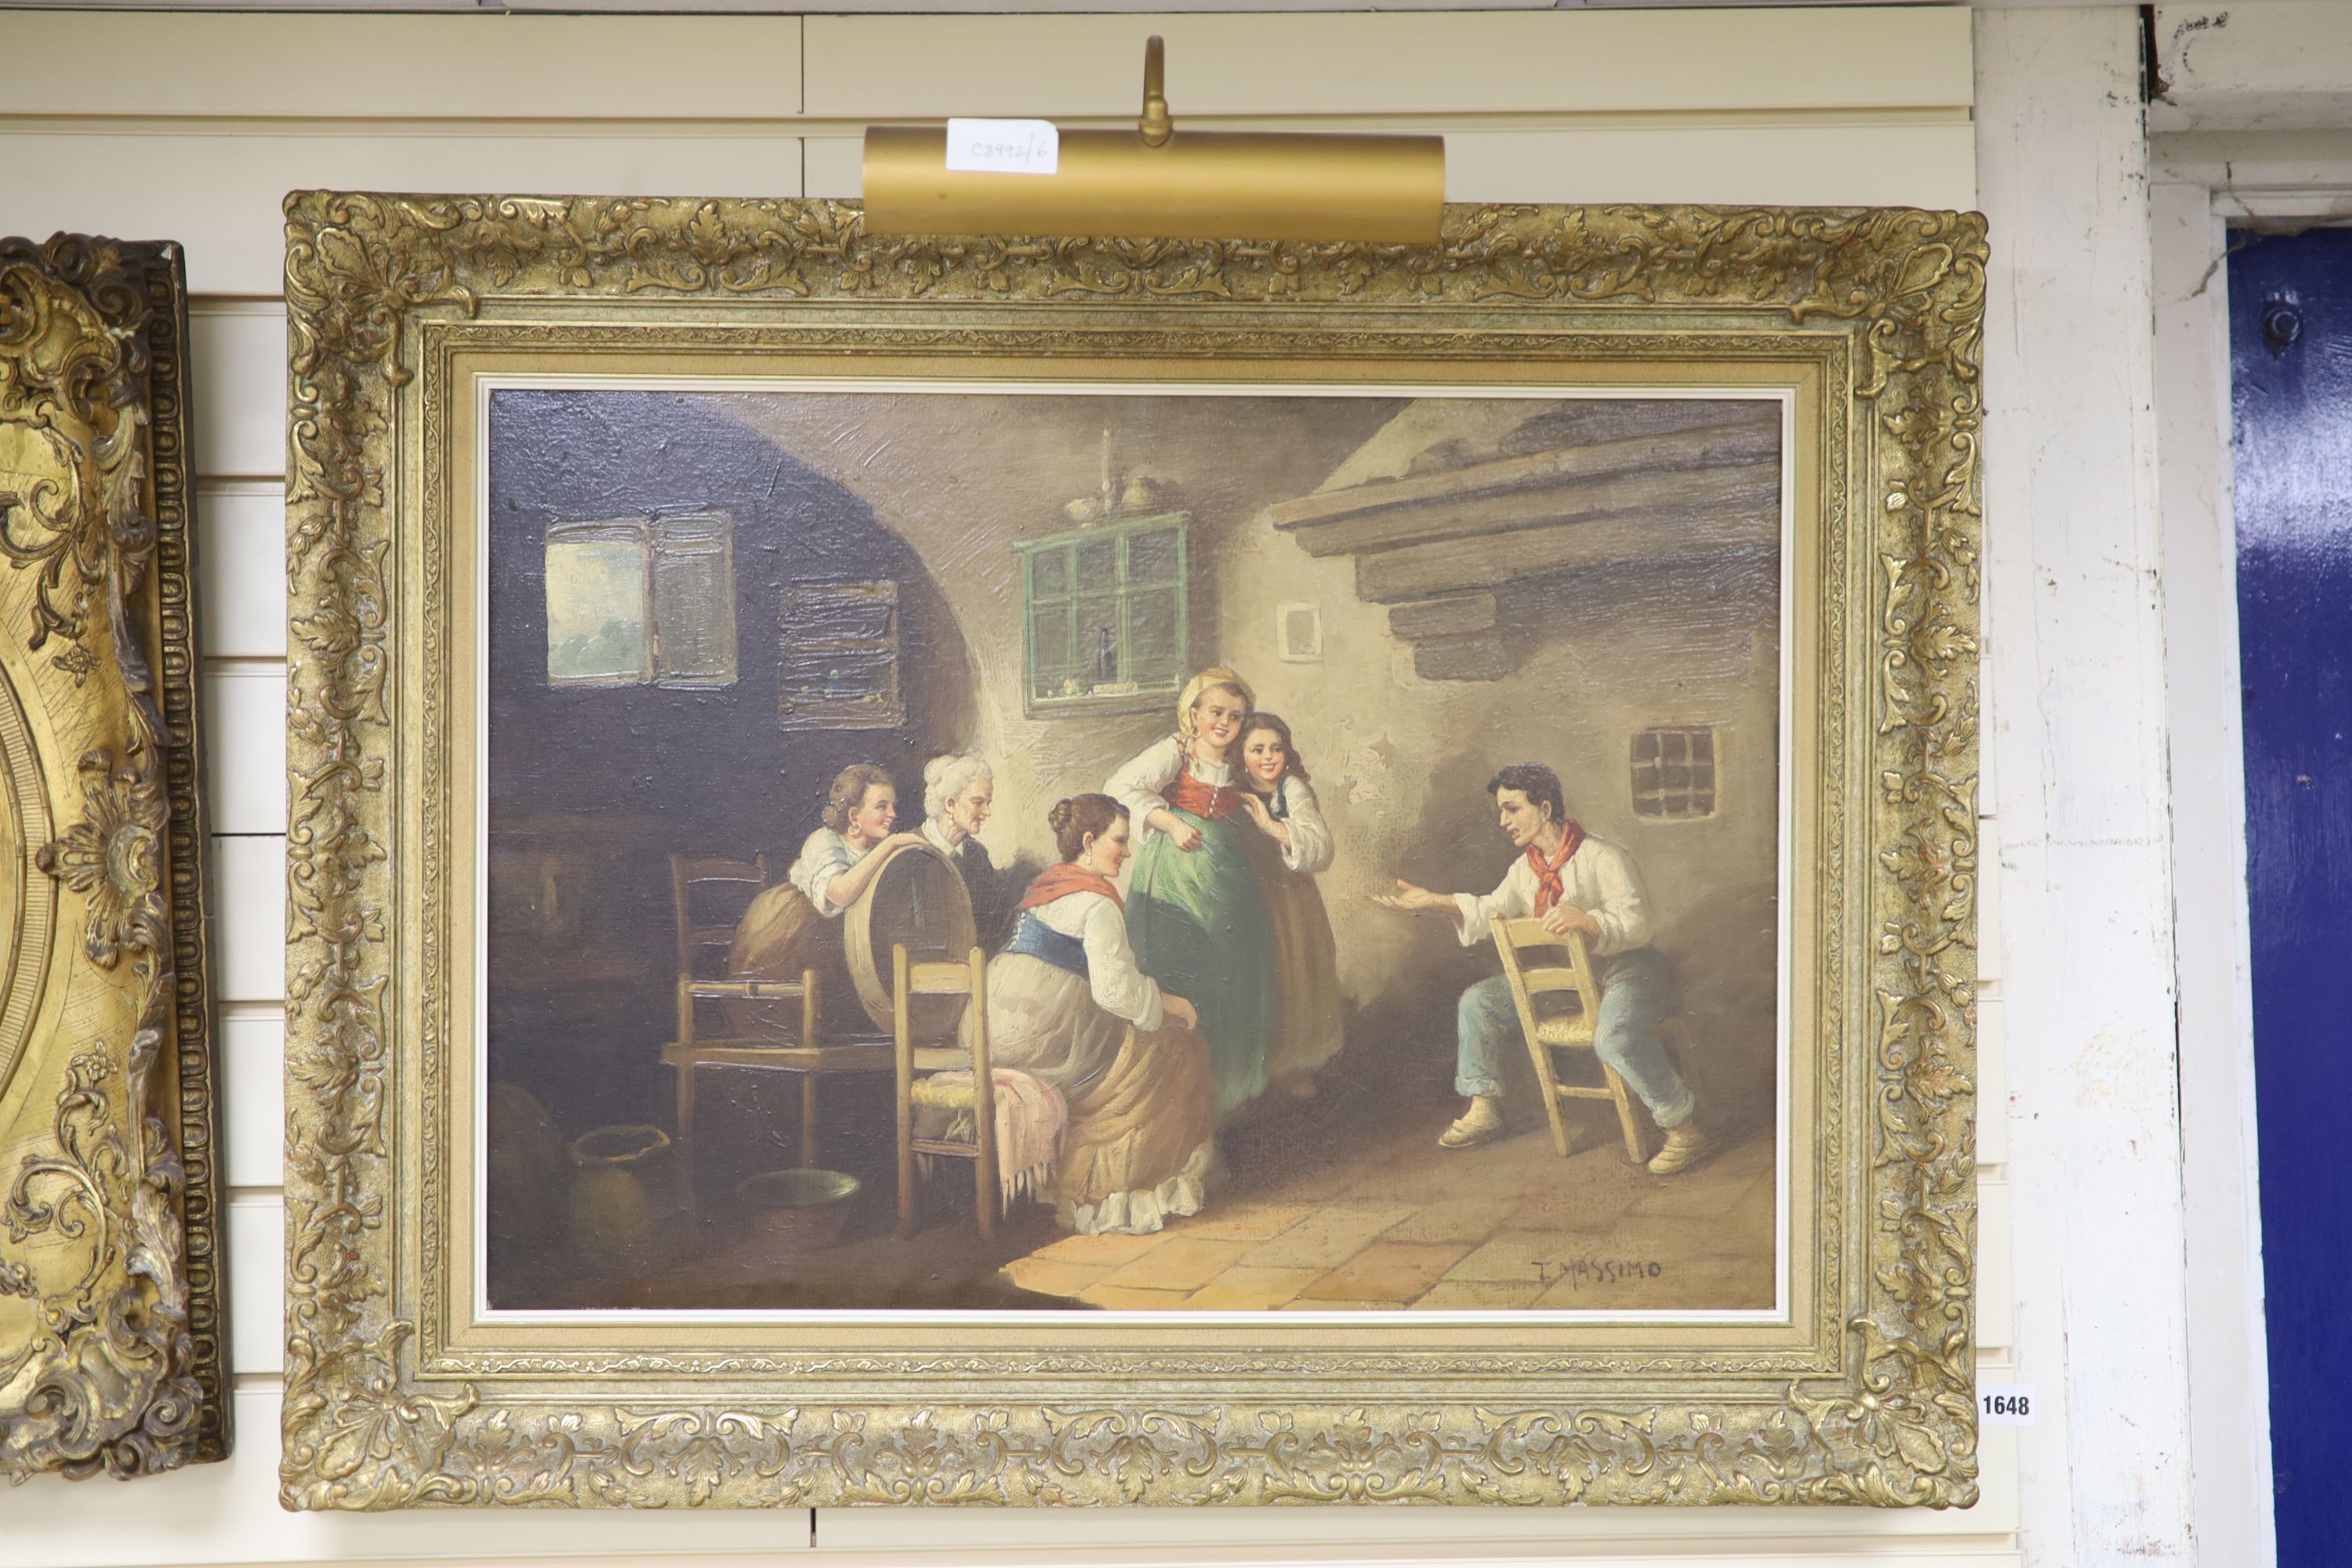 T. Massimo, oileograph, Italian interior with storyteller, 49 x 69cm